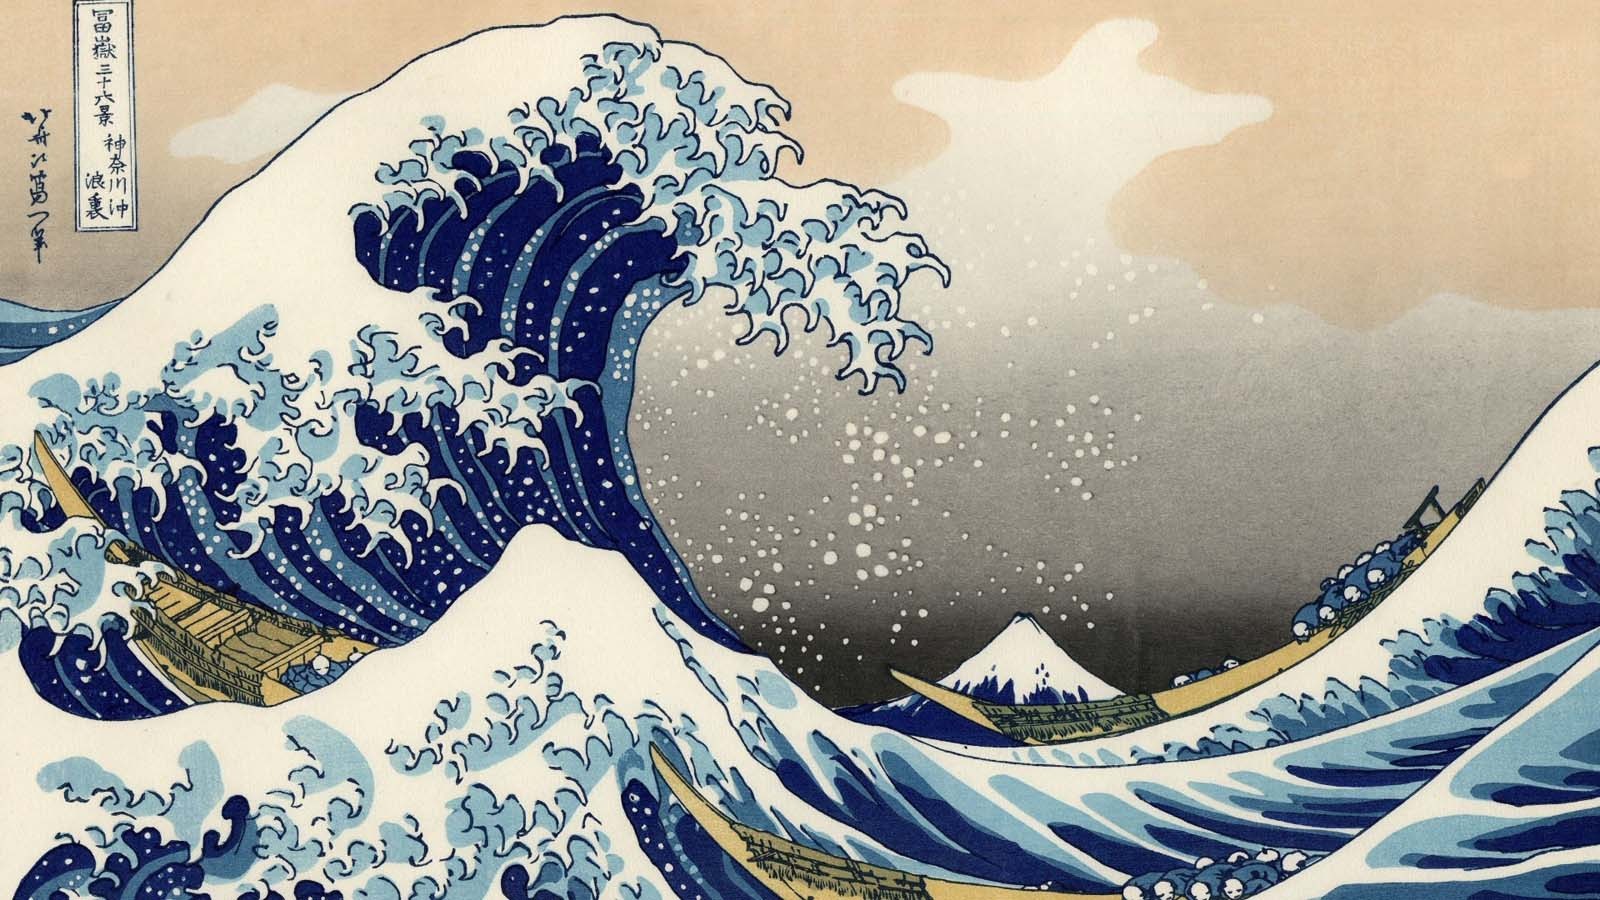 General 1600x900 The Great Wave of Kanagawa artwork sea waves Japanese Ukiyo-e water